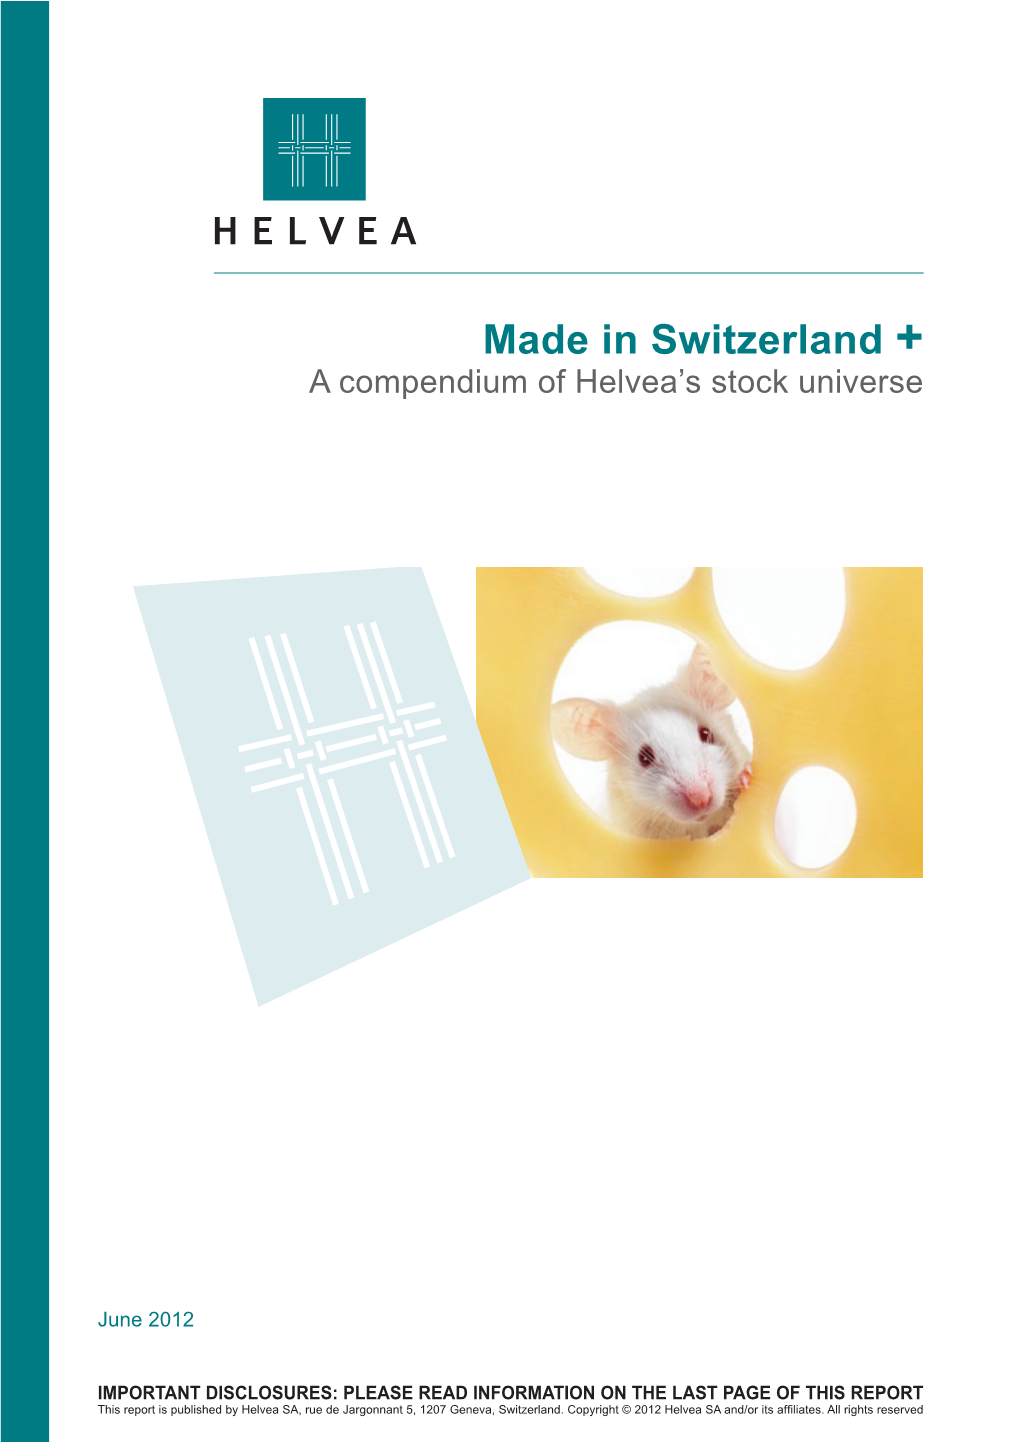 Made in Switzerland + a Compendium of Helvea’S Stock Universe